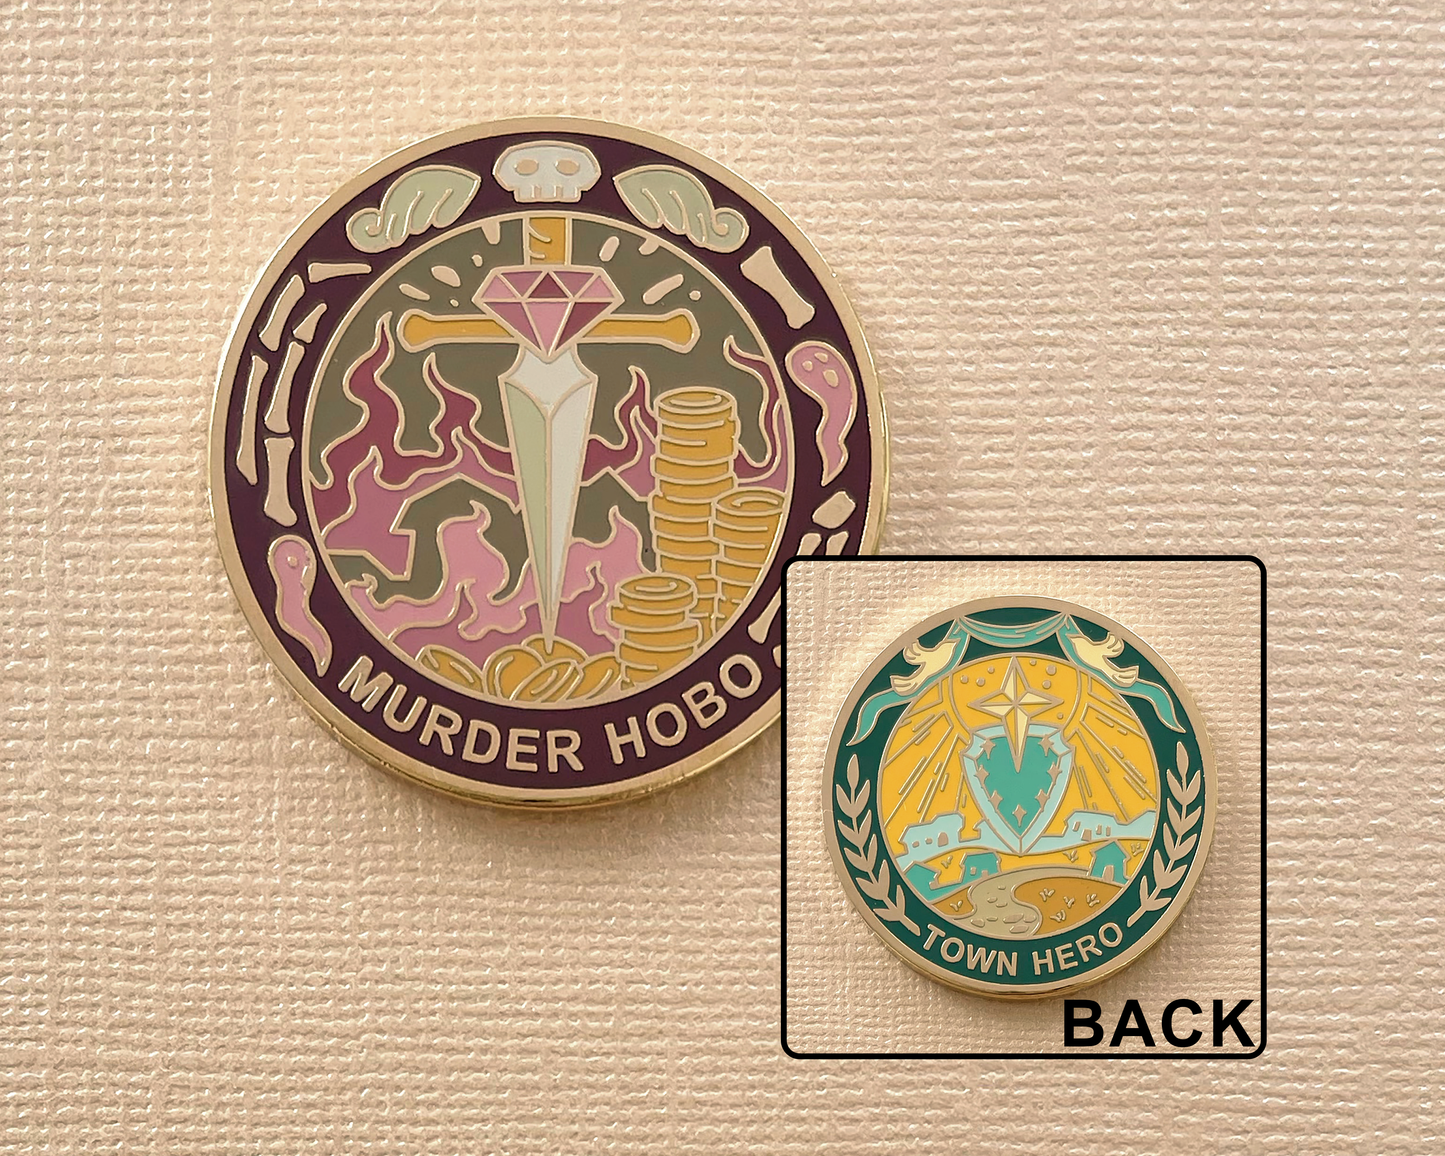 Murder Hobo/Town Hero Challenge coin D2